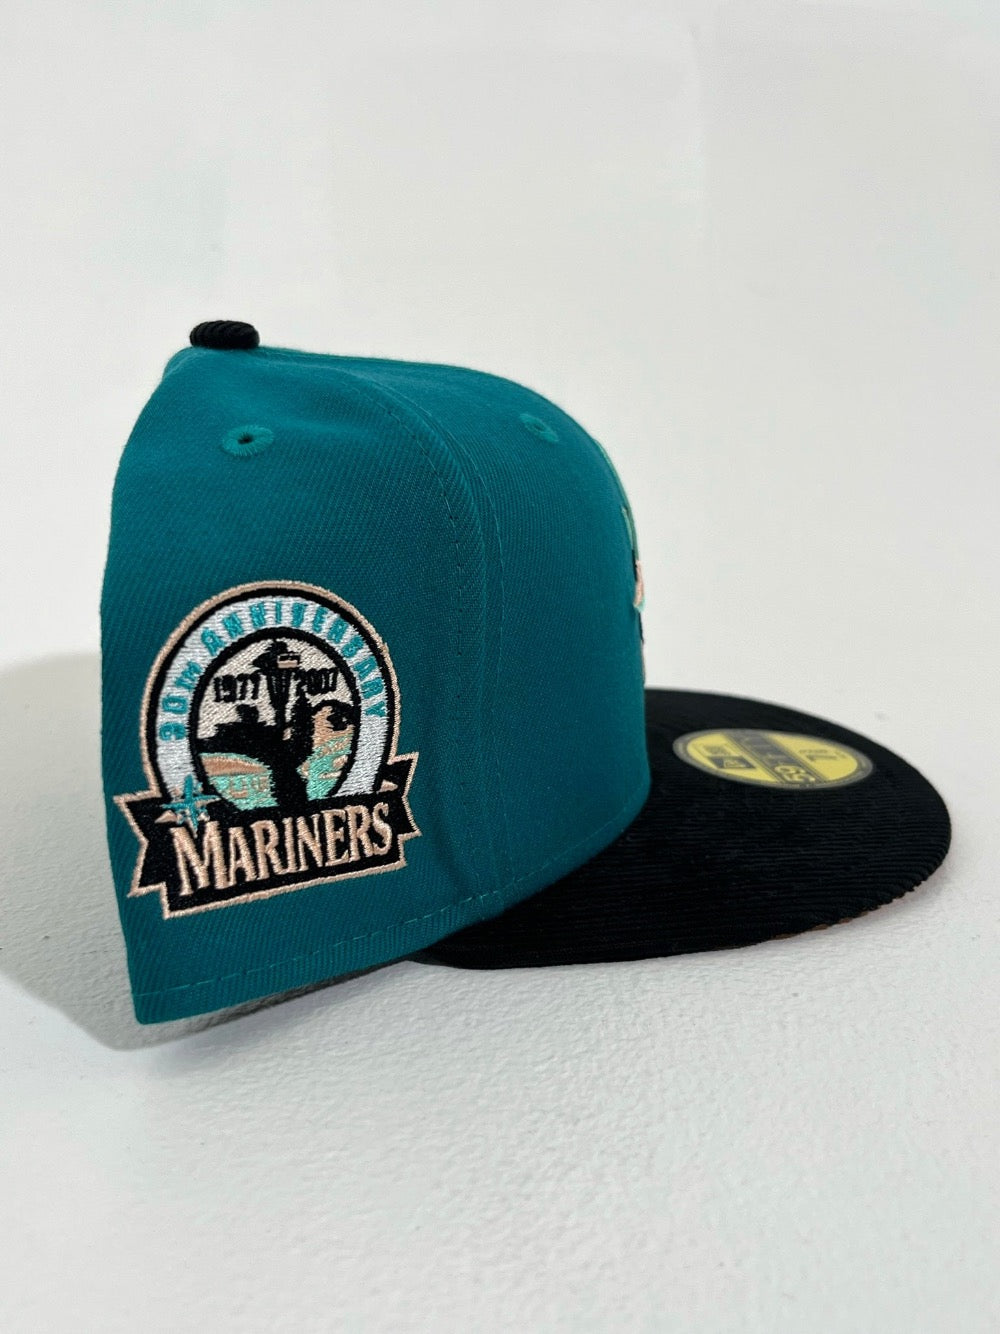 mariners teal hat